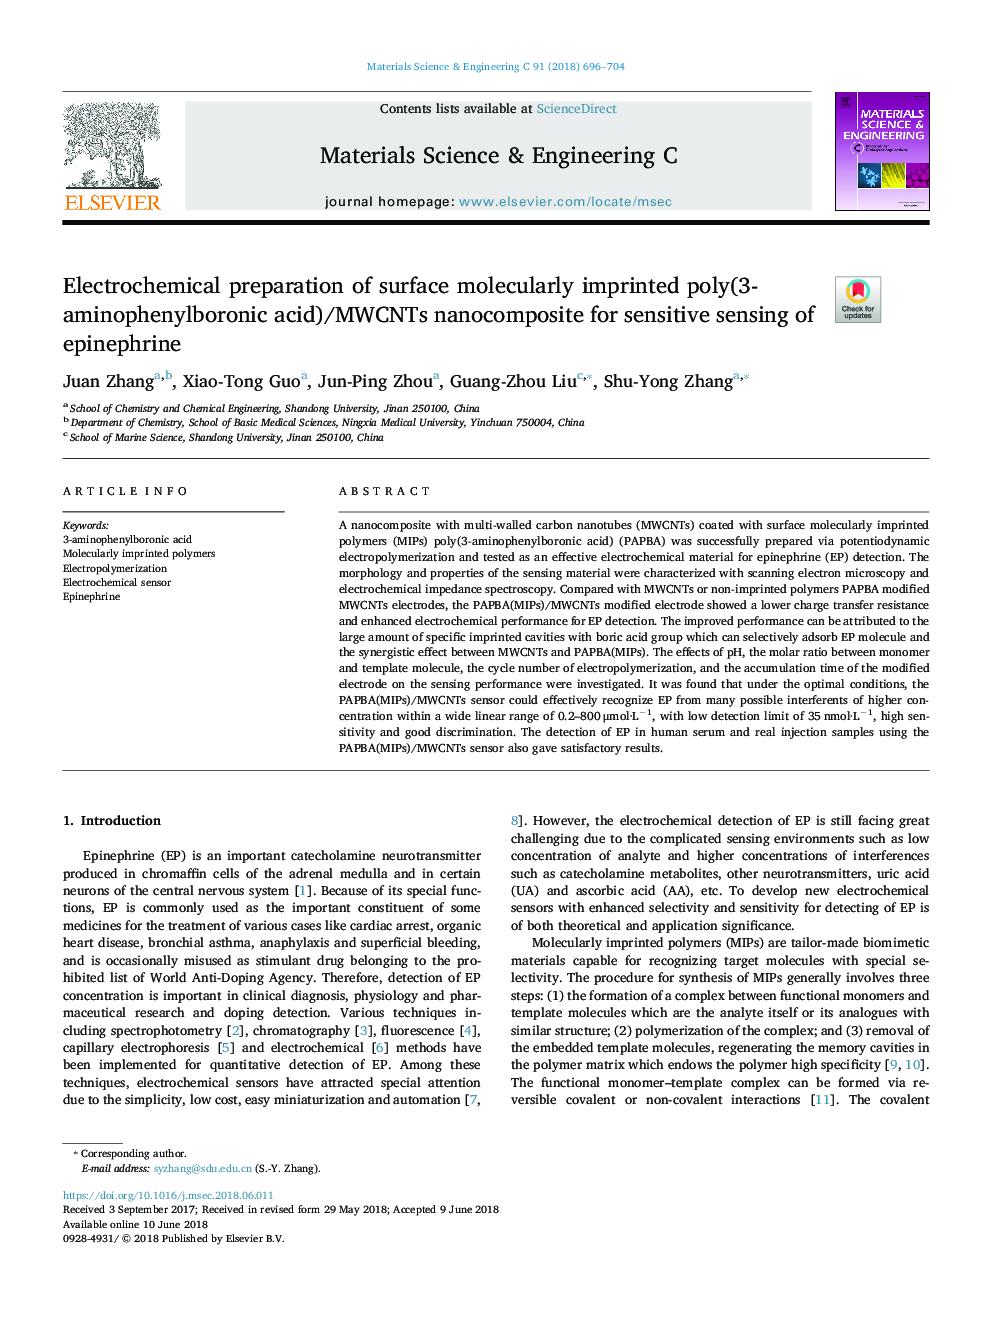 Electrochemical preparation of surface molecularly imprinted poly(3-aminophenylboronic acid)/MWCNTs nanocomposite for sensitive sensing of epinephrine